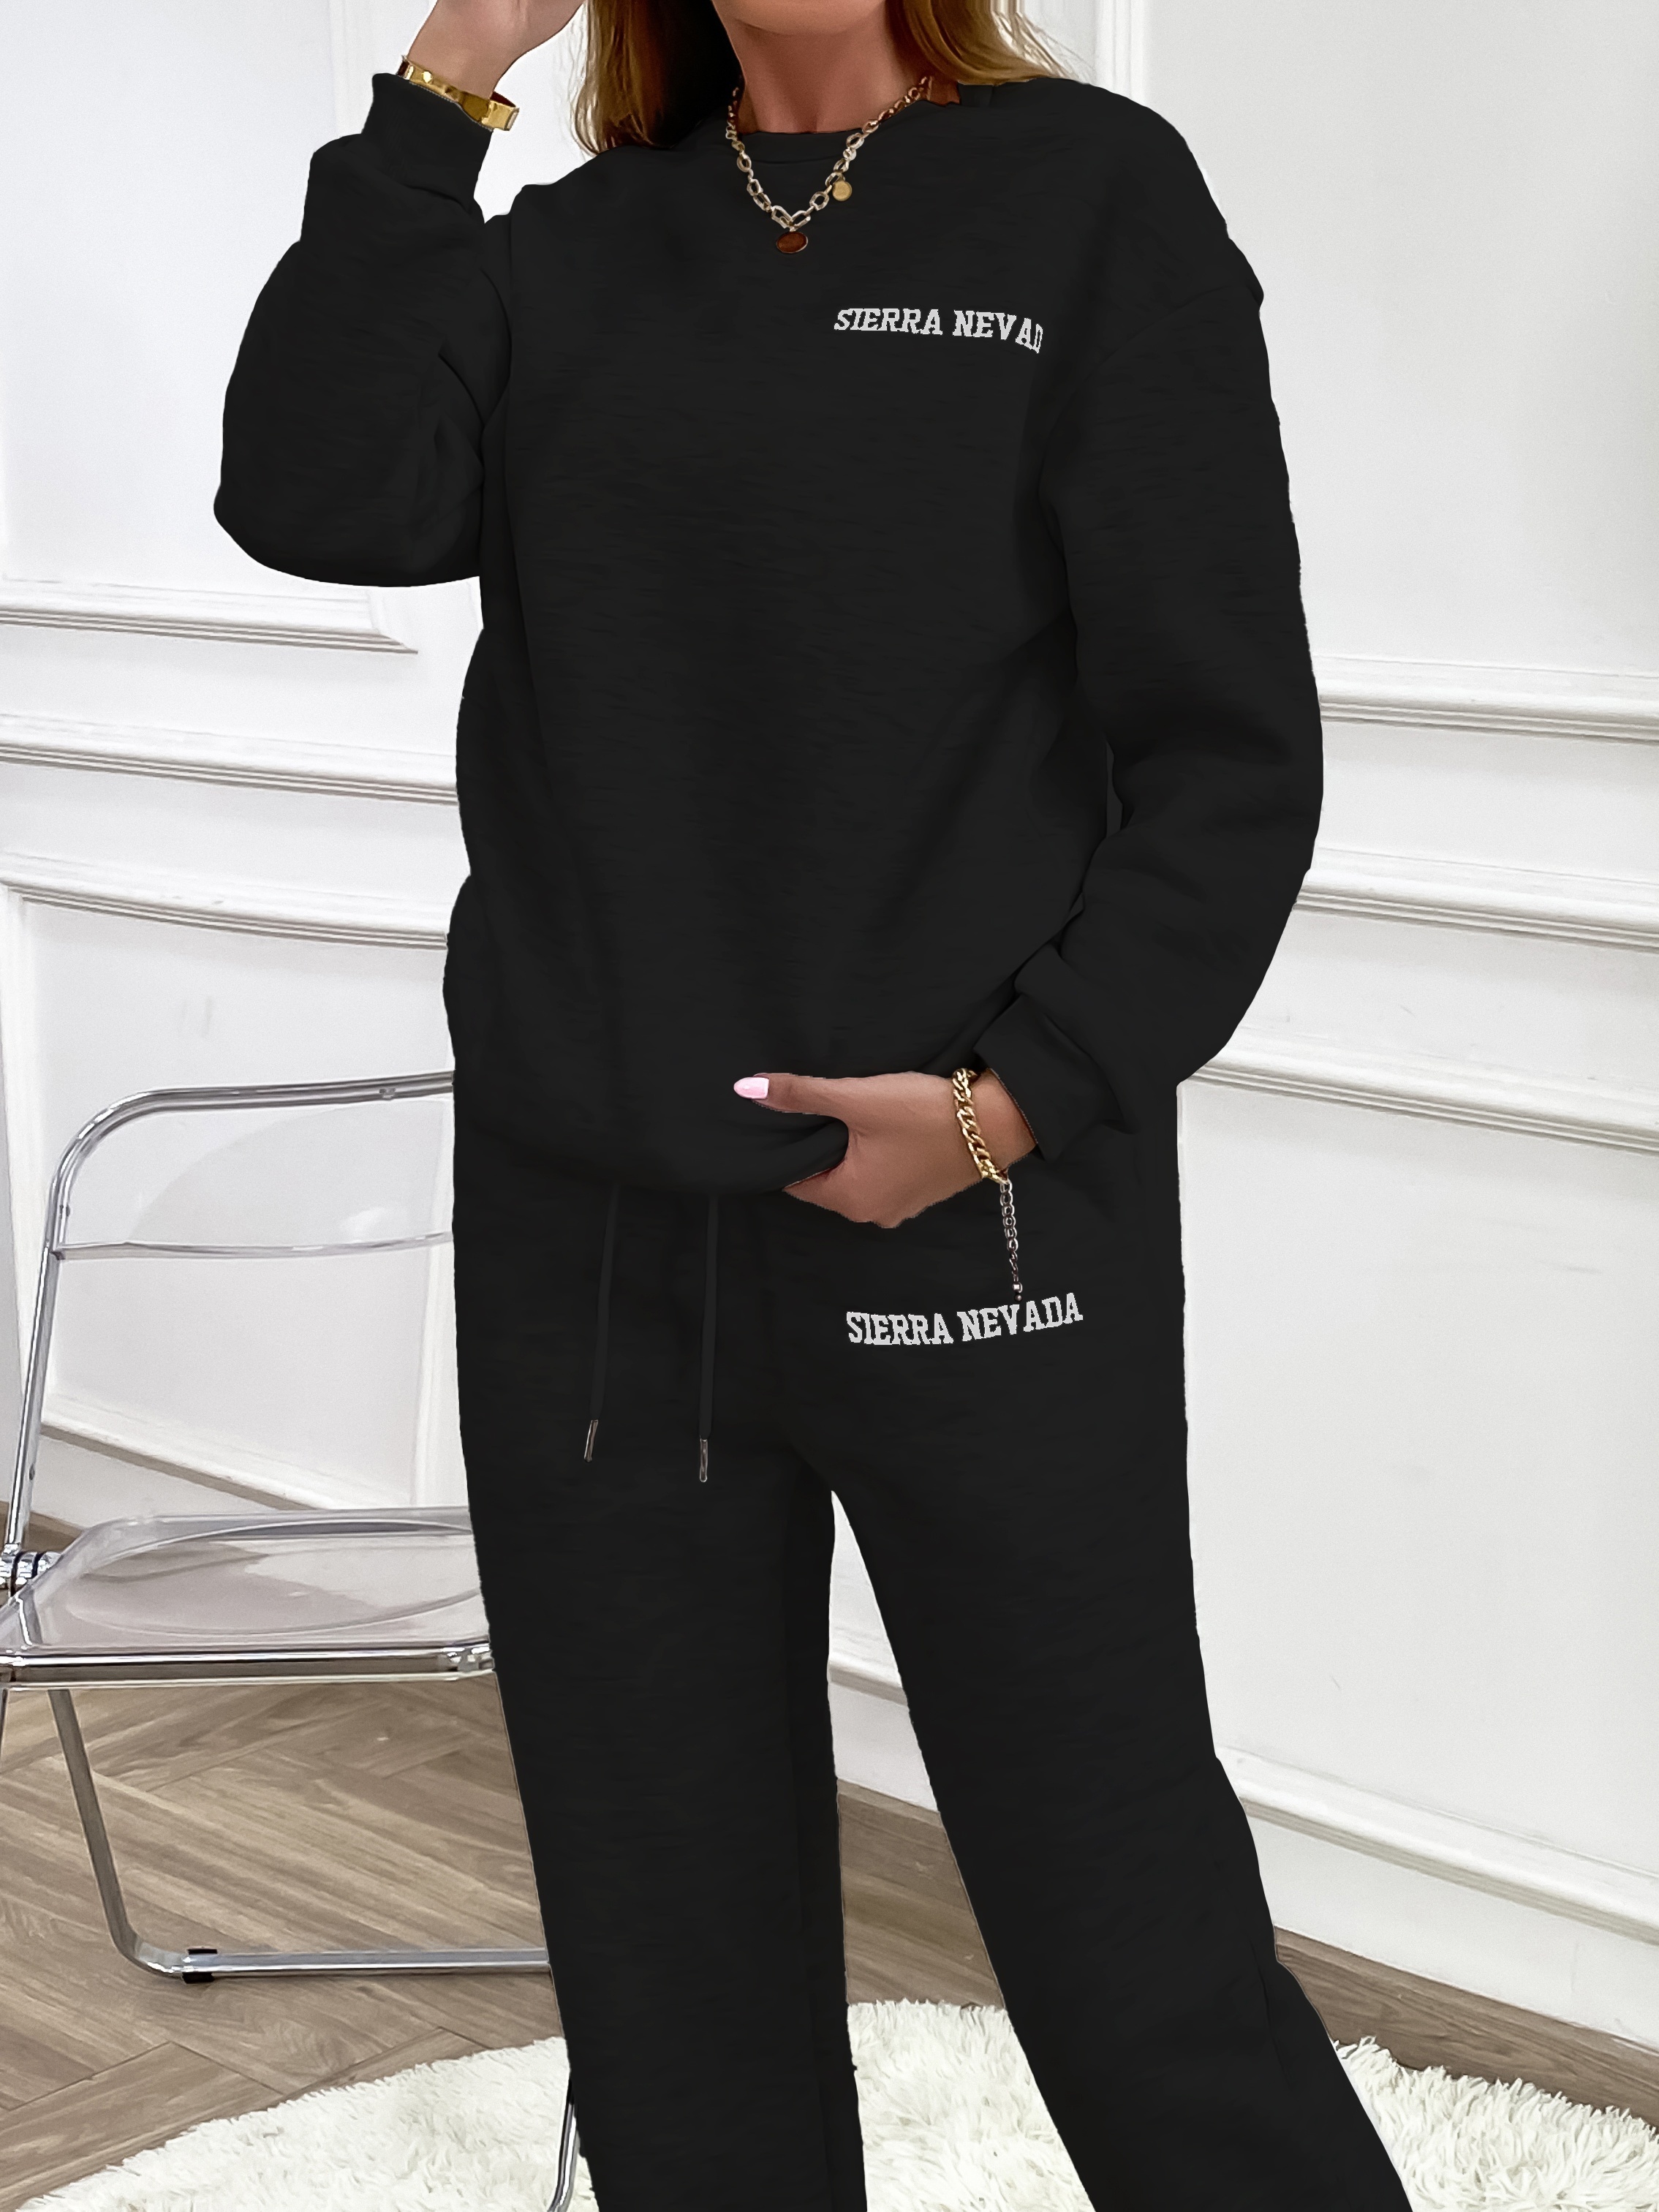 NALANISA Women's 2 Piece Outfits Tracksuit Casual Crewneck Long Sleeve  Sweatshirt Tops Jogger Pants lounge Sets Sweatsuit : : Clothing,  Shoes